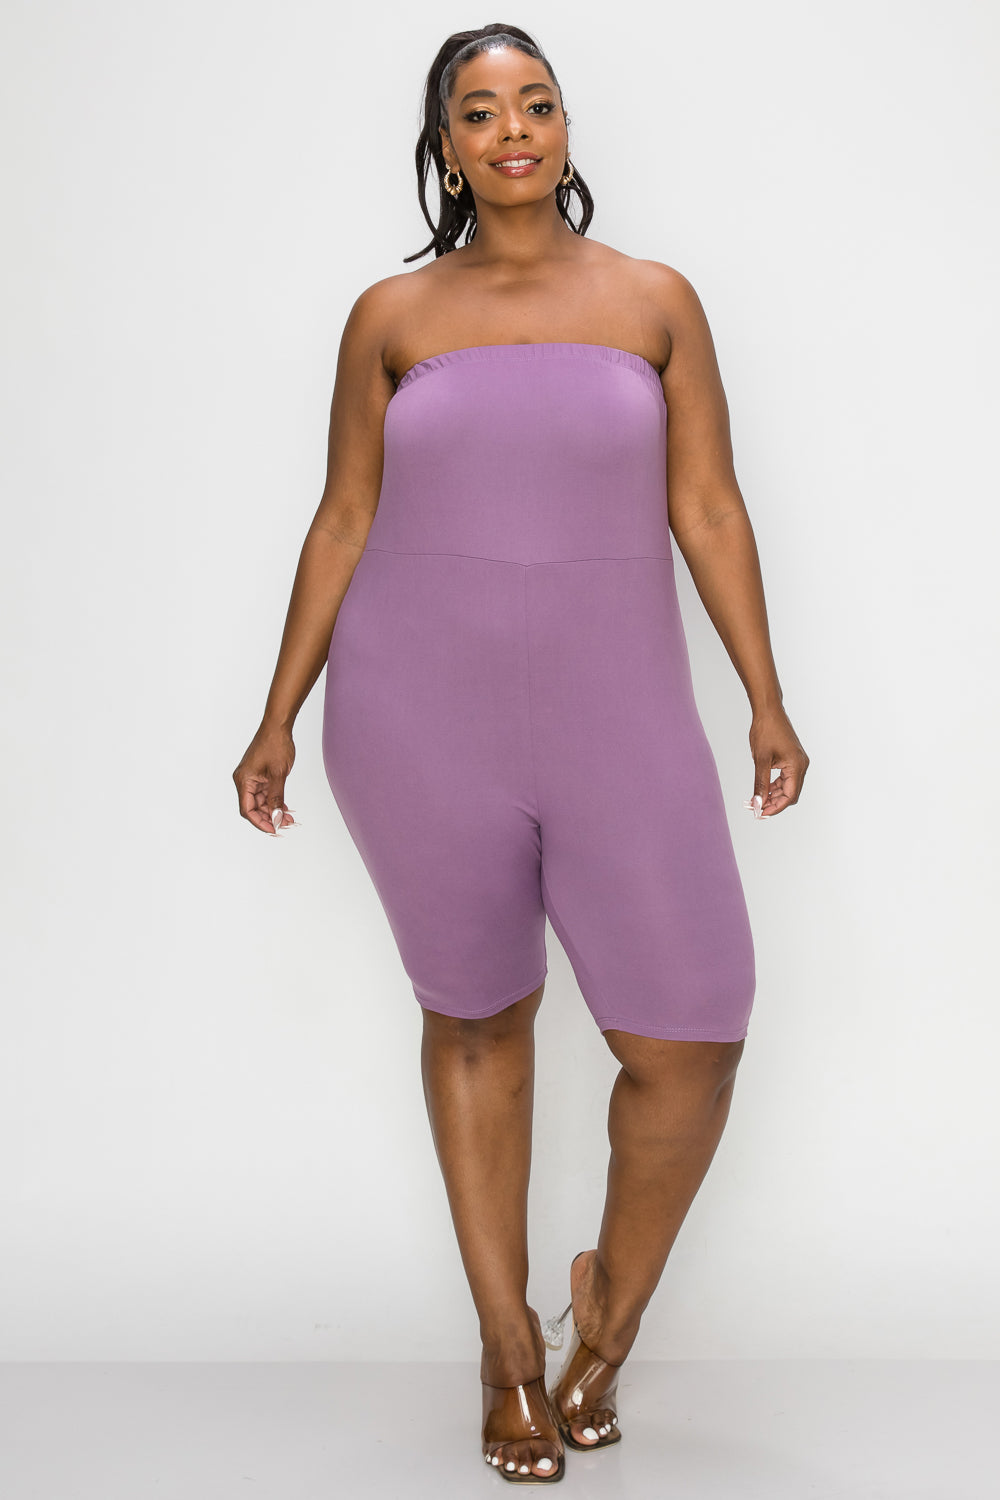 livd L I V D women's plus size boutique bodycon romper in dusty lavender purple